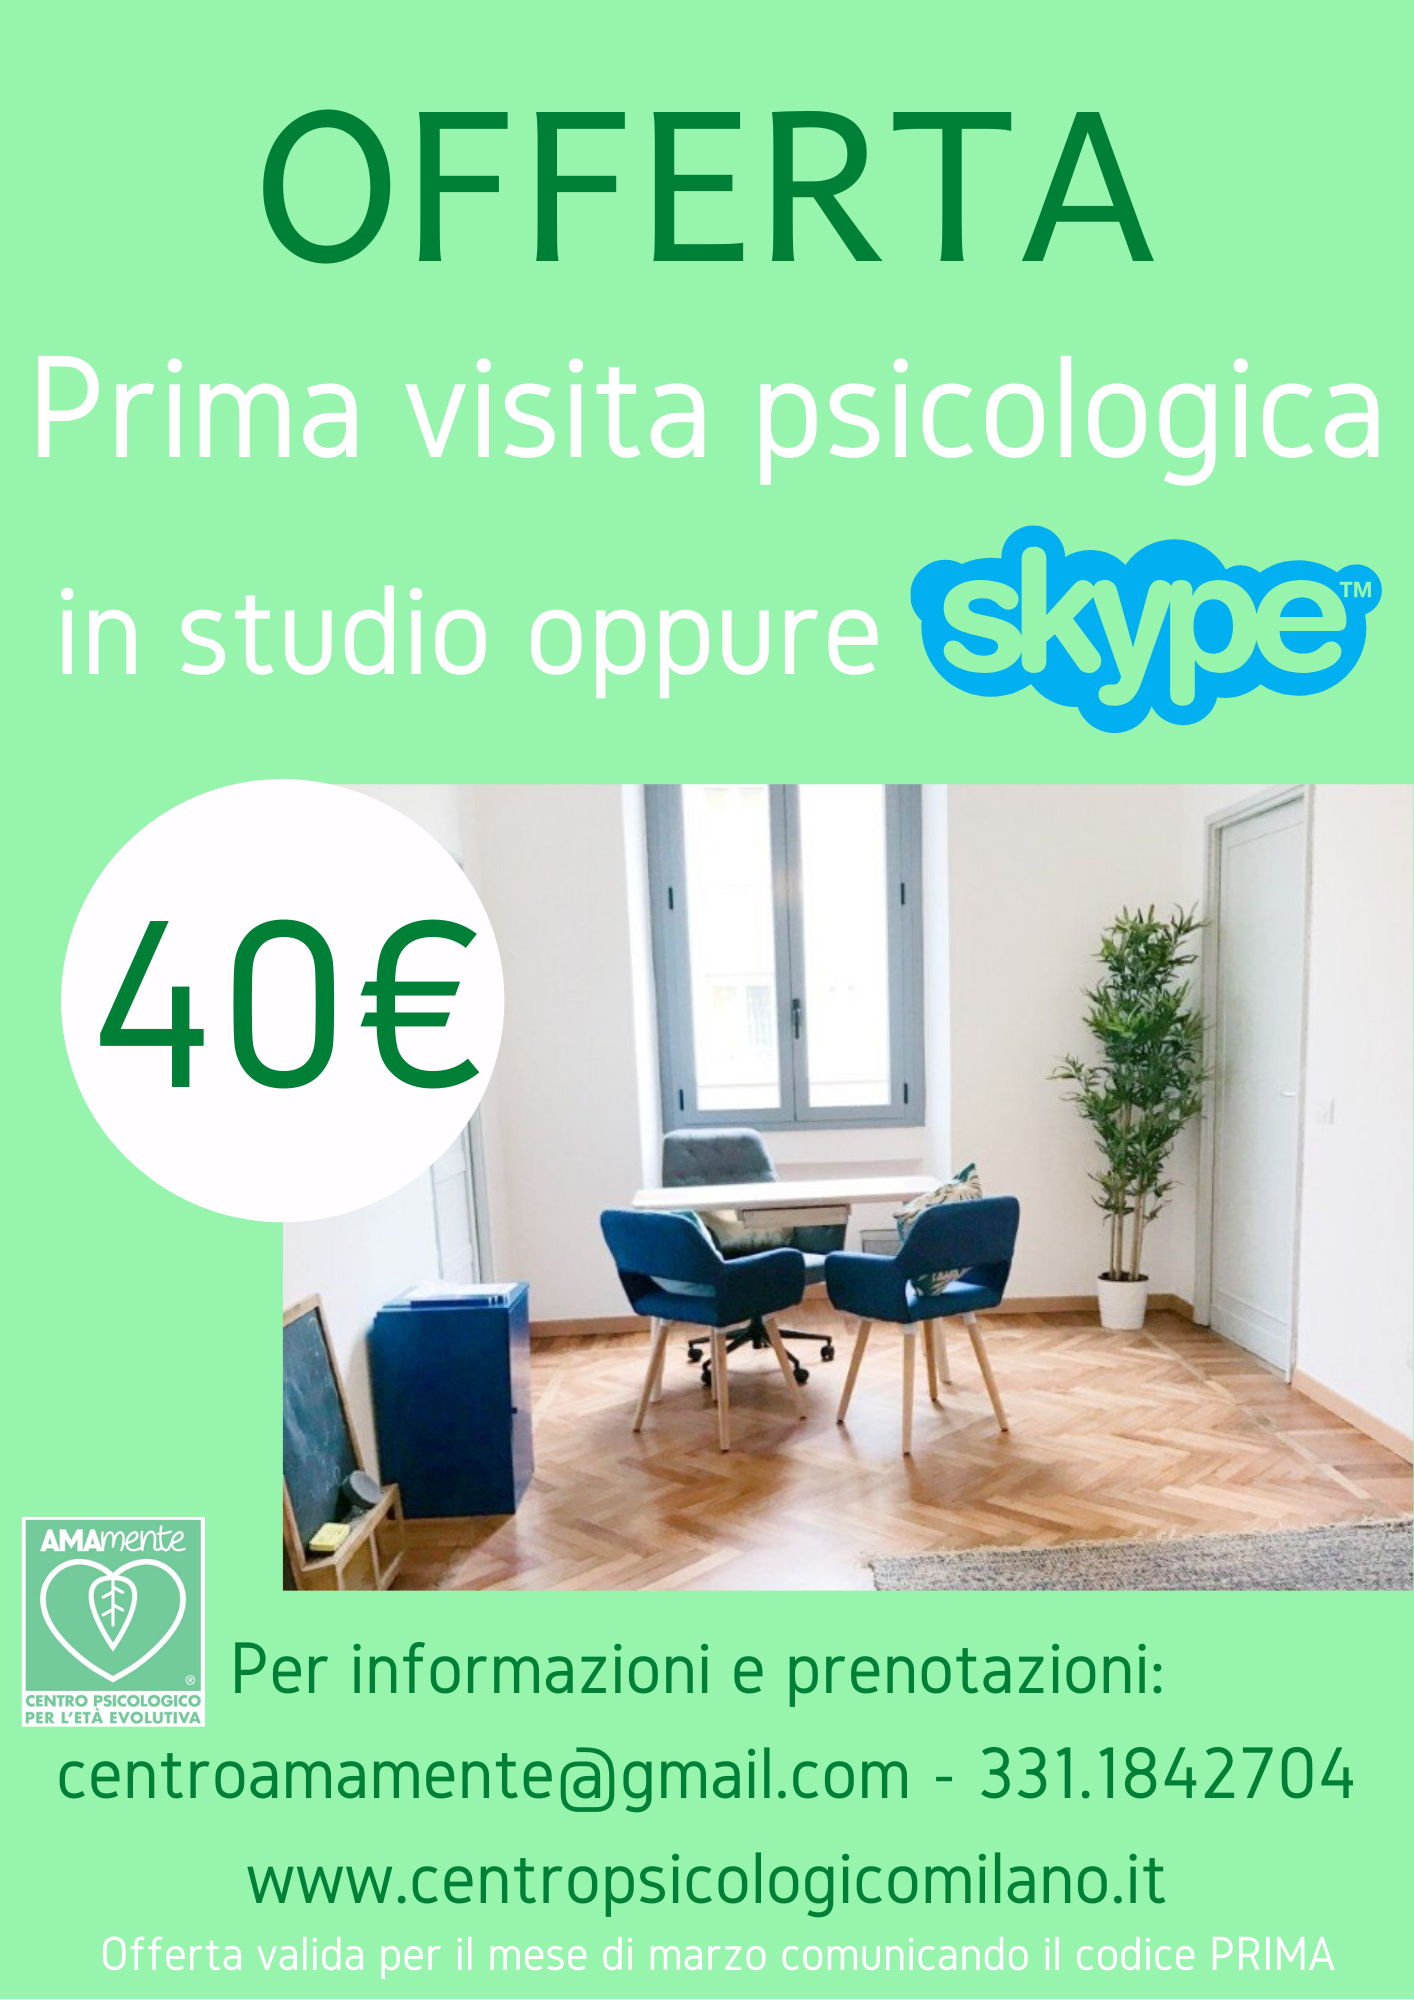 Psicologo skype